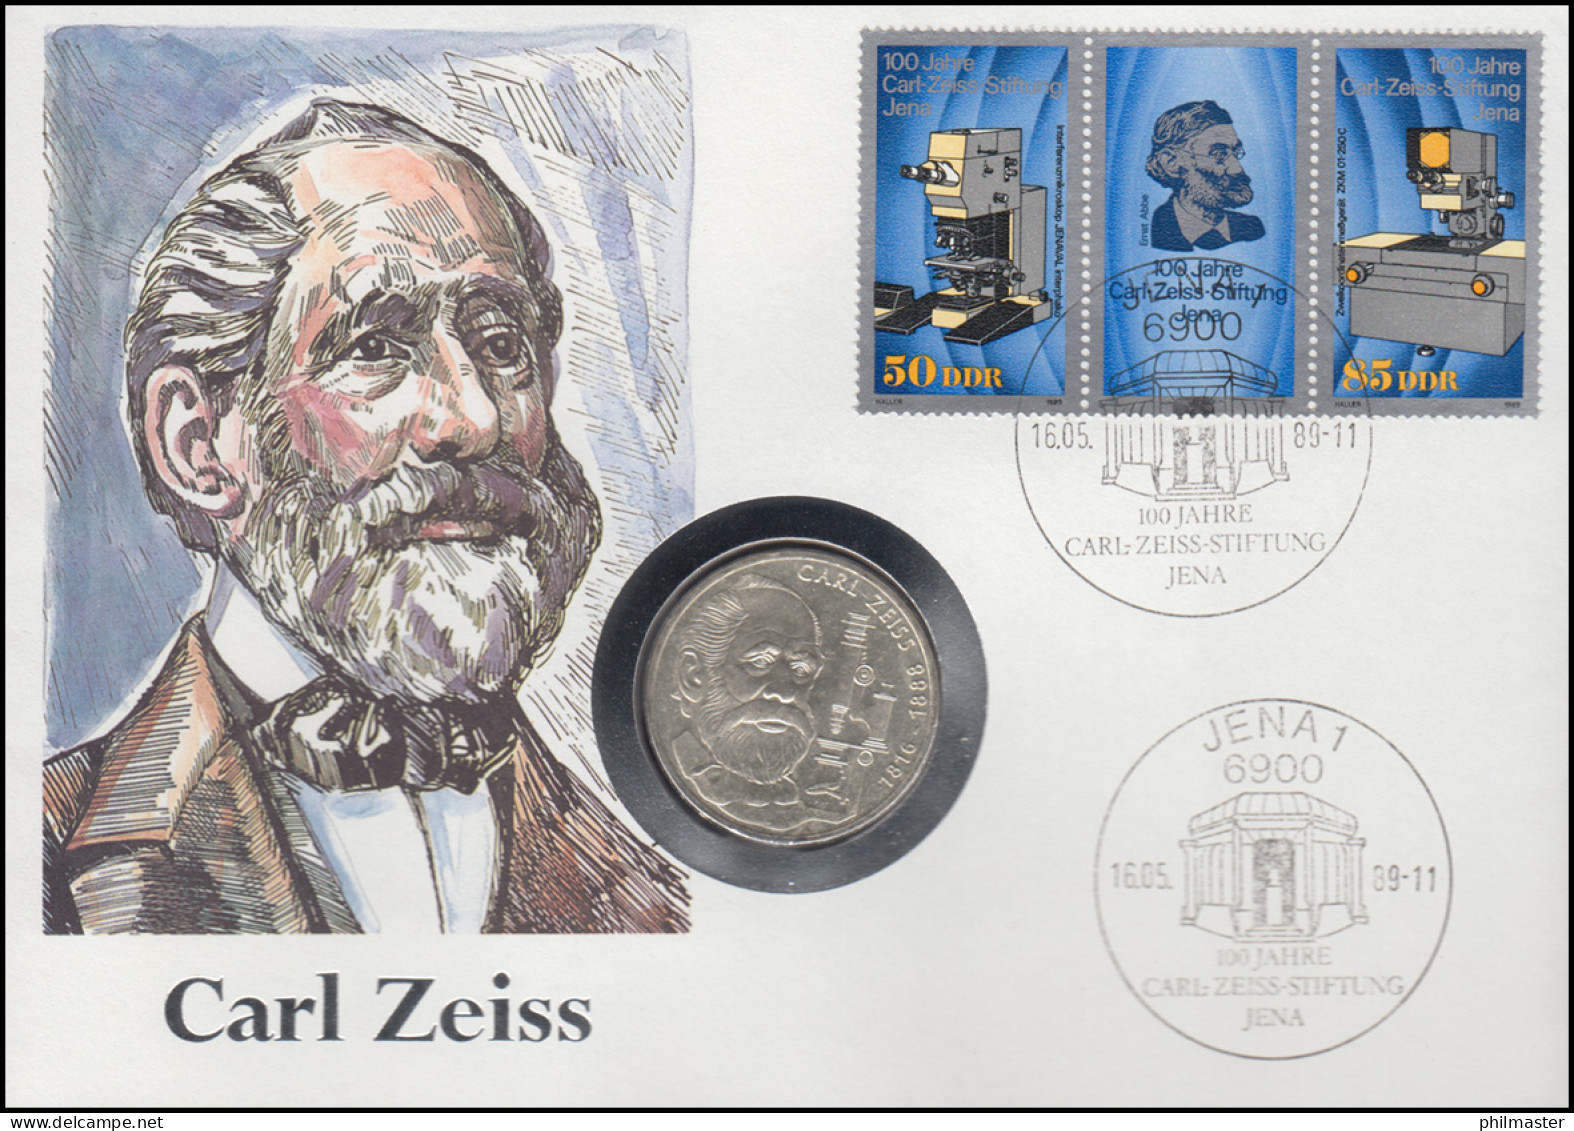 Numisbrief Carl Zeiss, 10 DM Silber / ZD DDR, ESST Jena 16.05.1989 - Coin Envelopes